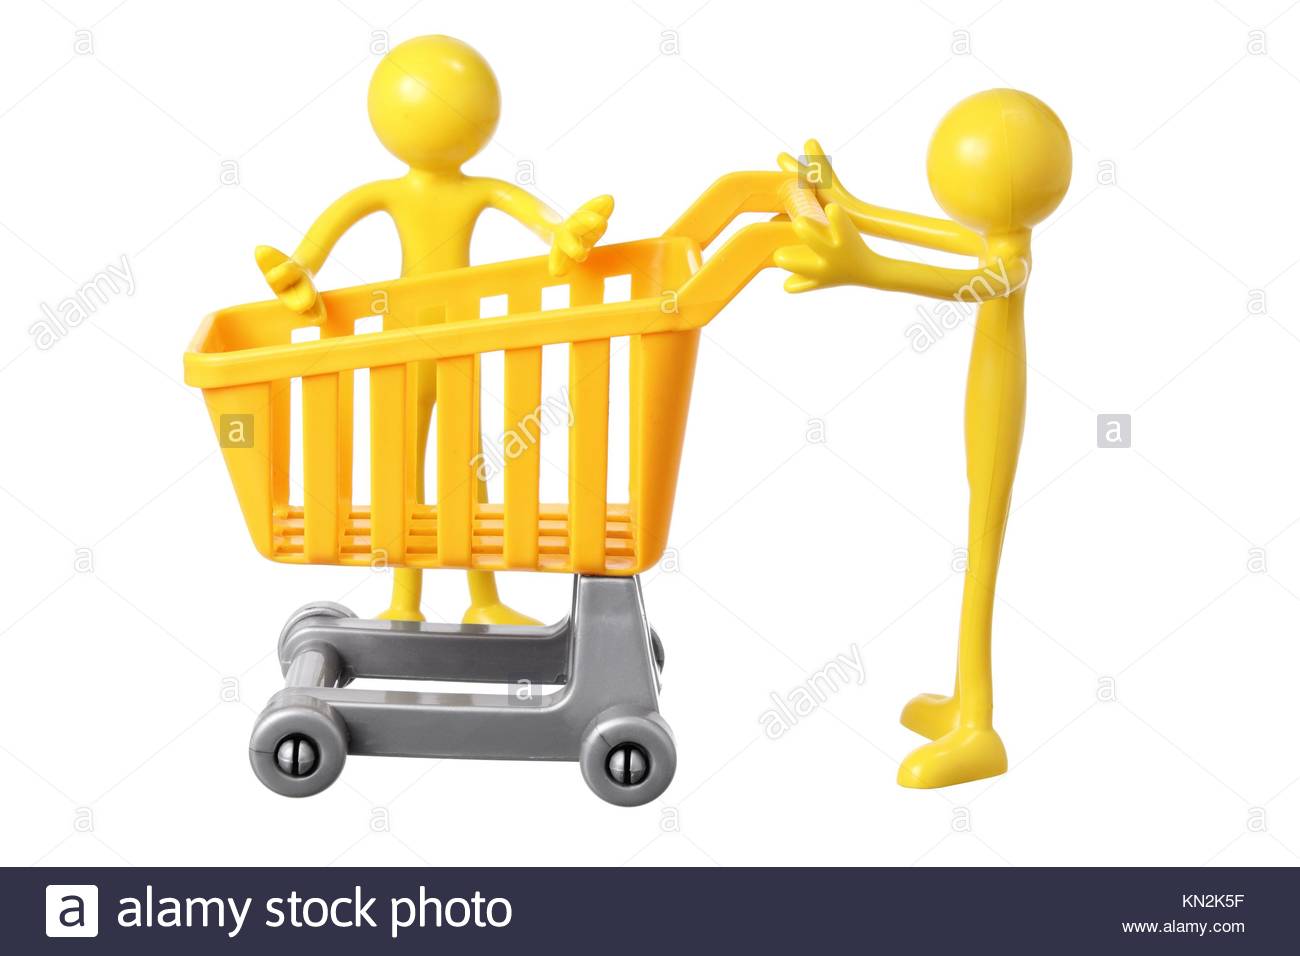 Miniature Shopping Trolley On White Background Stock Photo